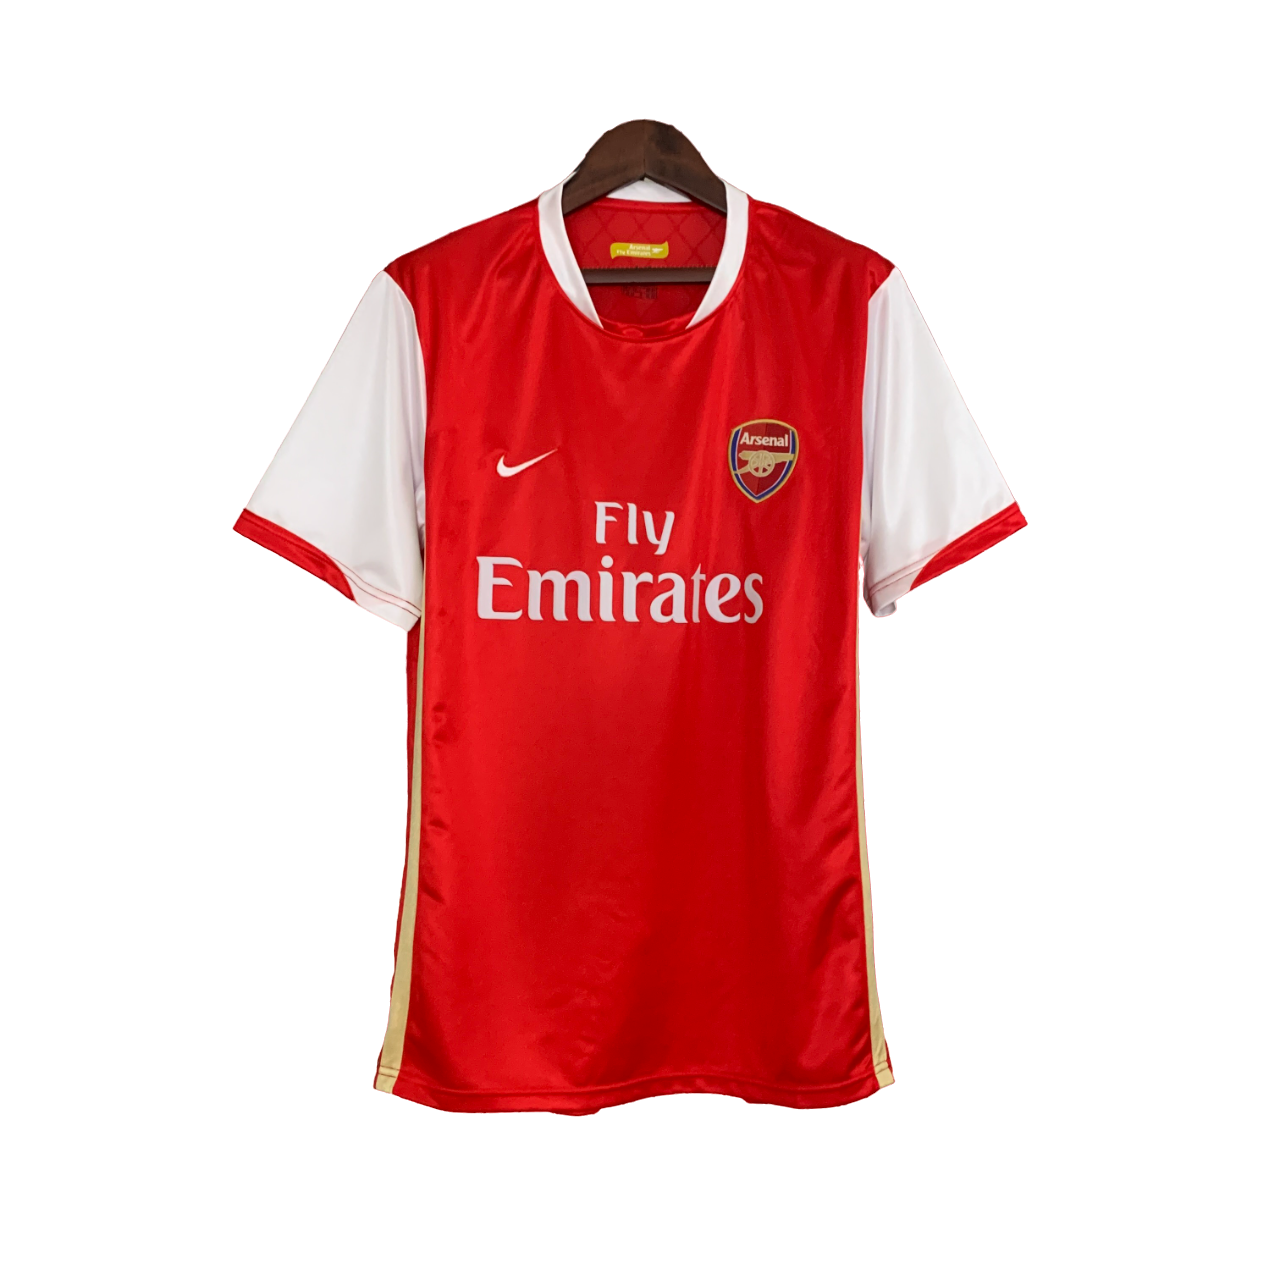 Arsenal - 06/08 Vintage